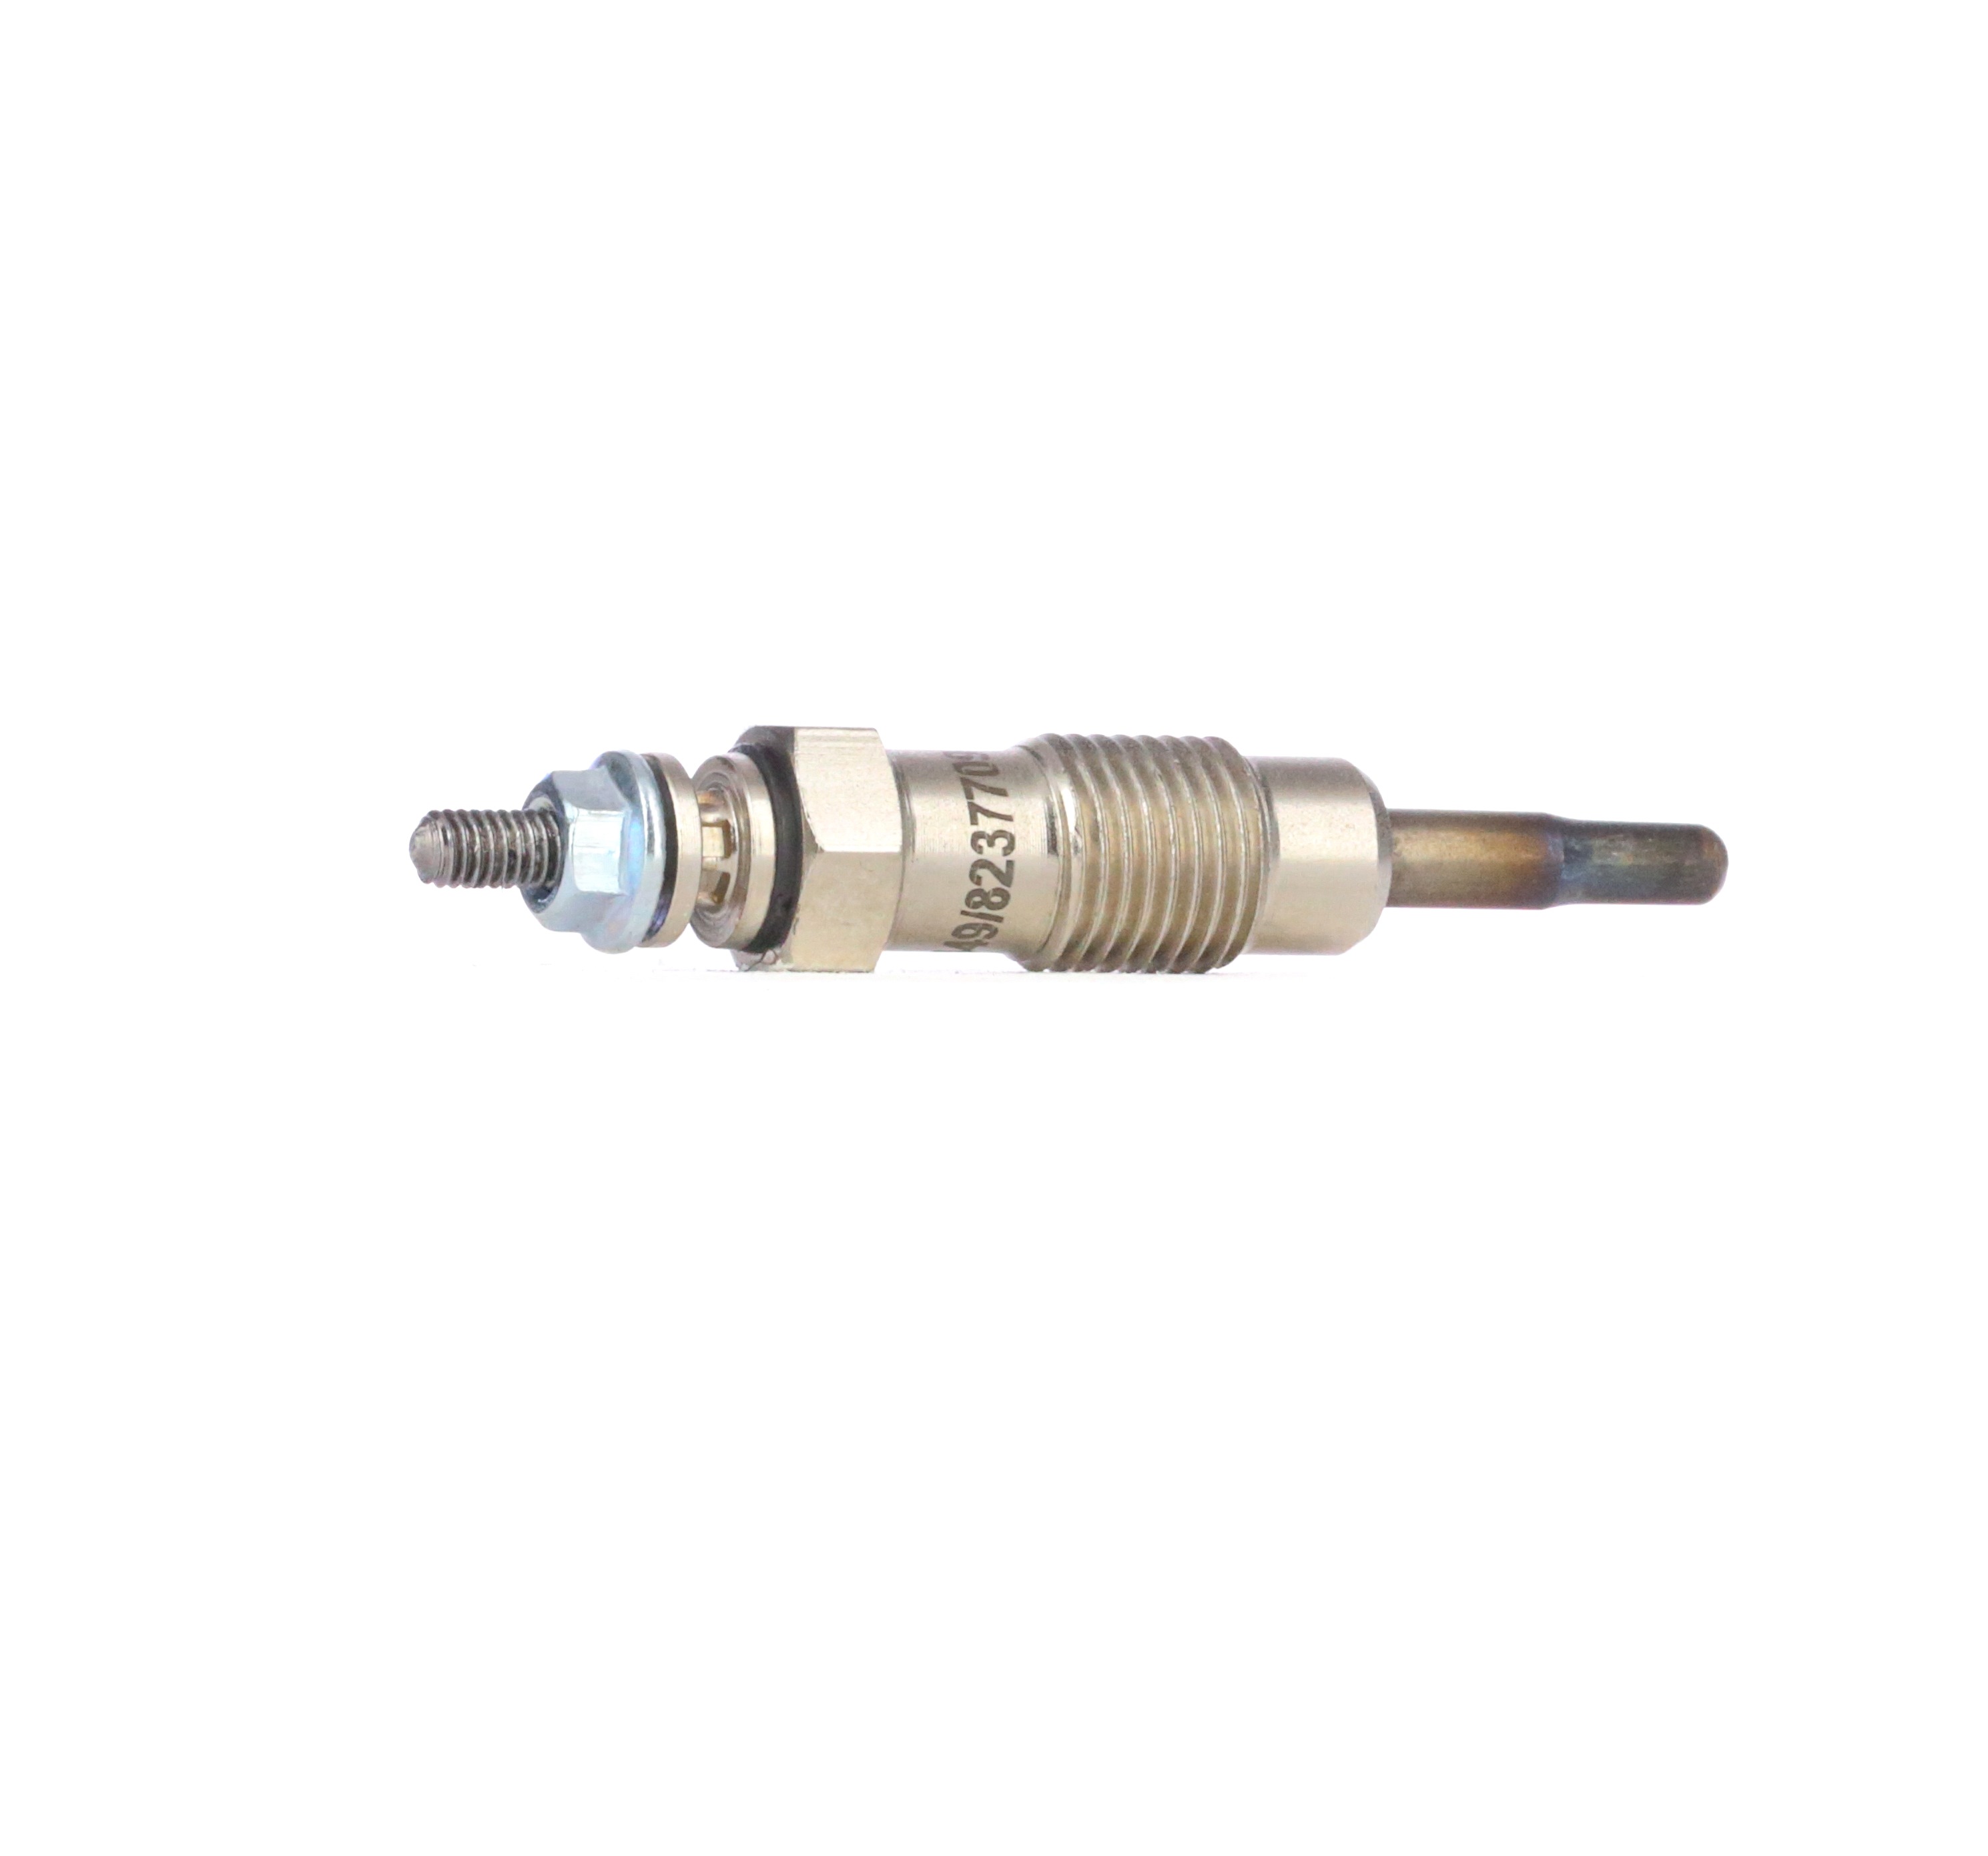 SKGP-1890228 STARK Glow plug RENAULT 11V M 12 x 1,25, after-glow capable, Length: 66 mm, 63